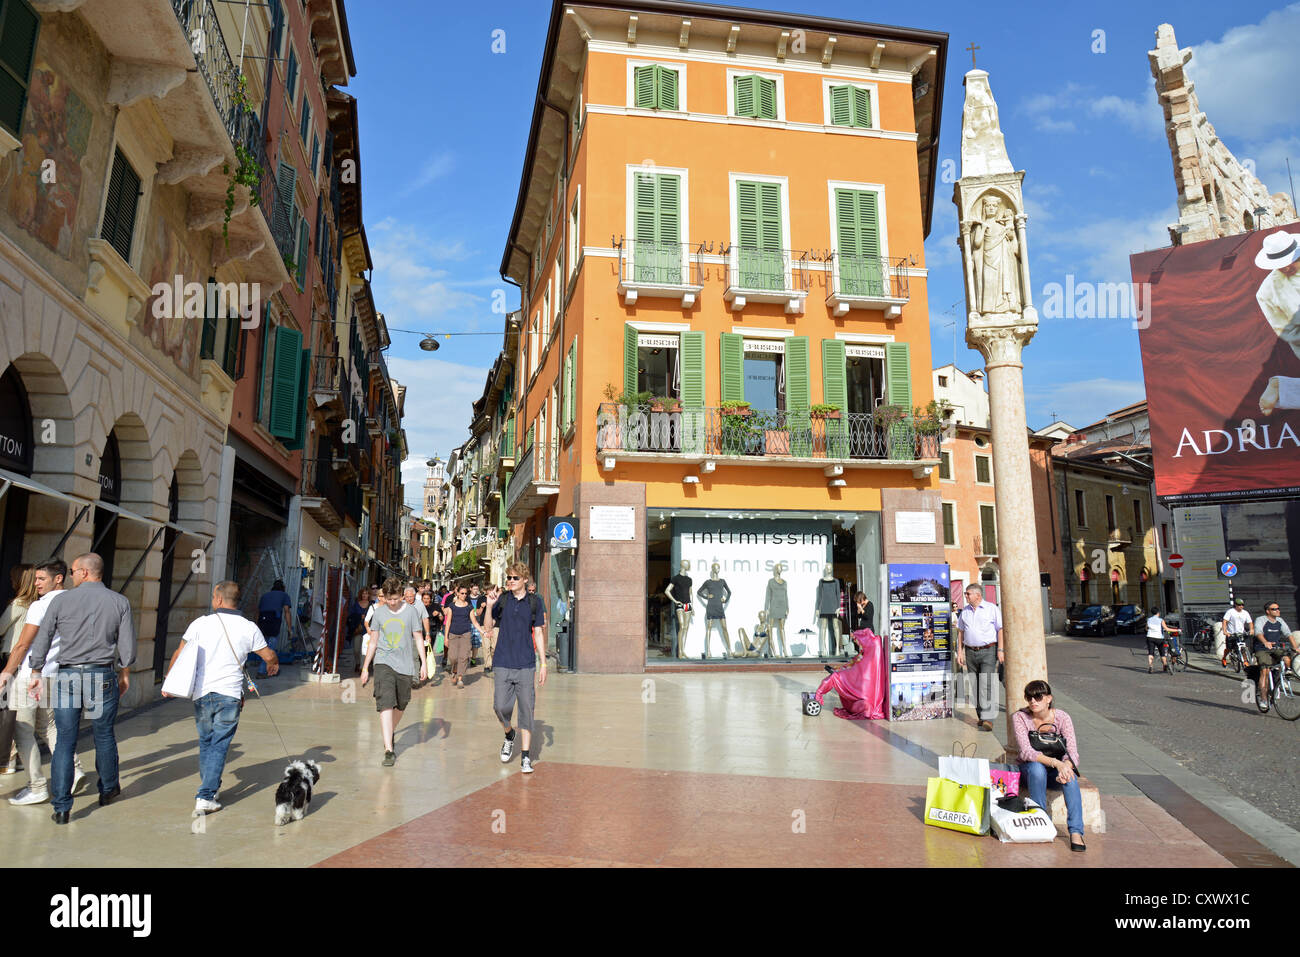 Entrée de la Via Mazzini, la Piazza Bra, Verona, Verona Province, Région du Veneto, Italie Banque D'Images